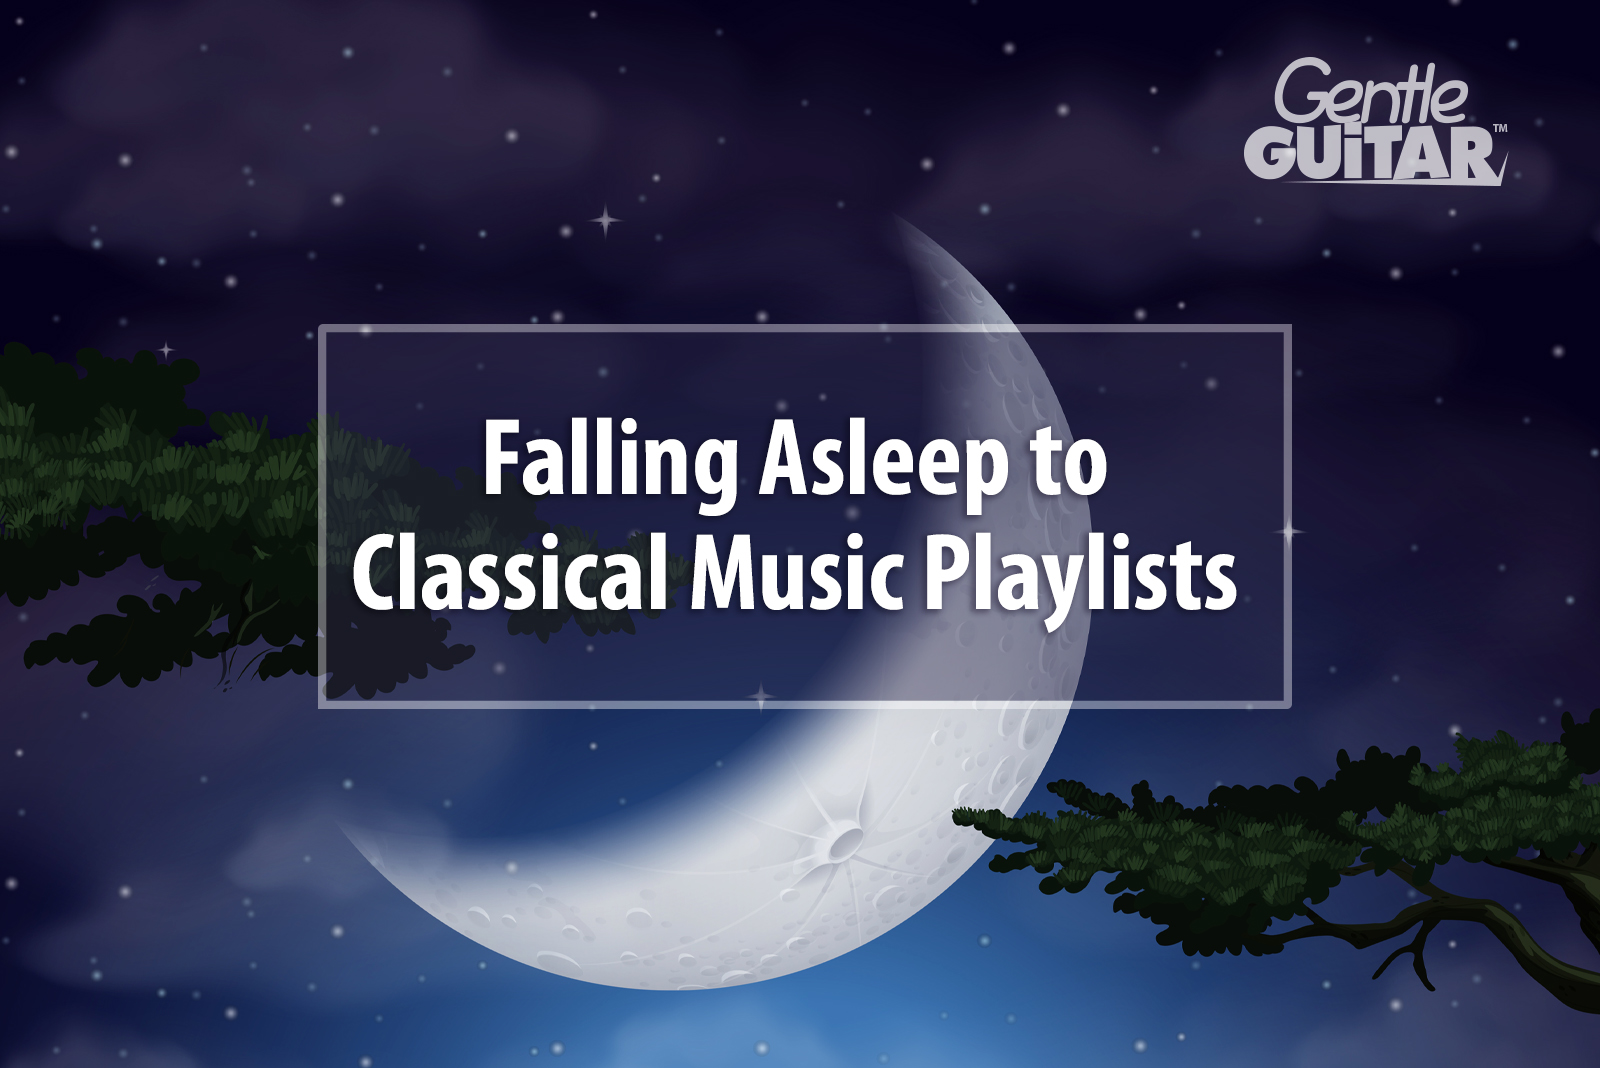 Falling Asleep to classical music